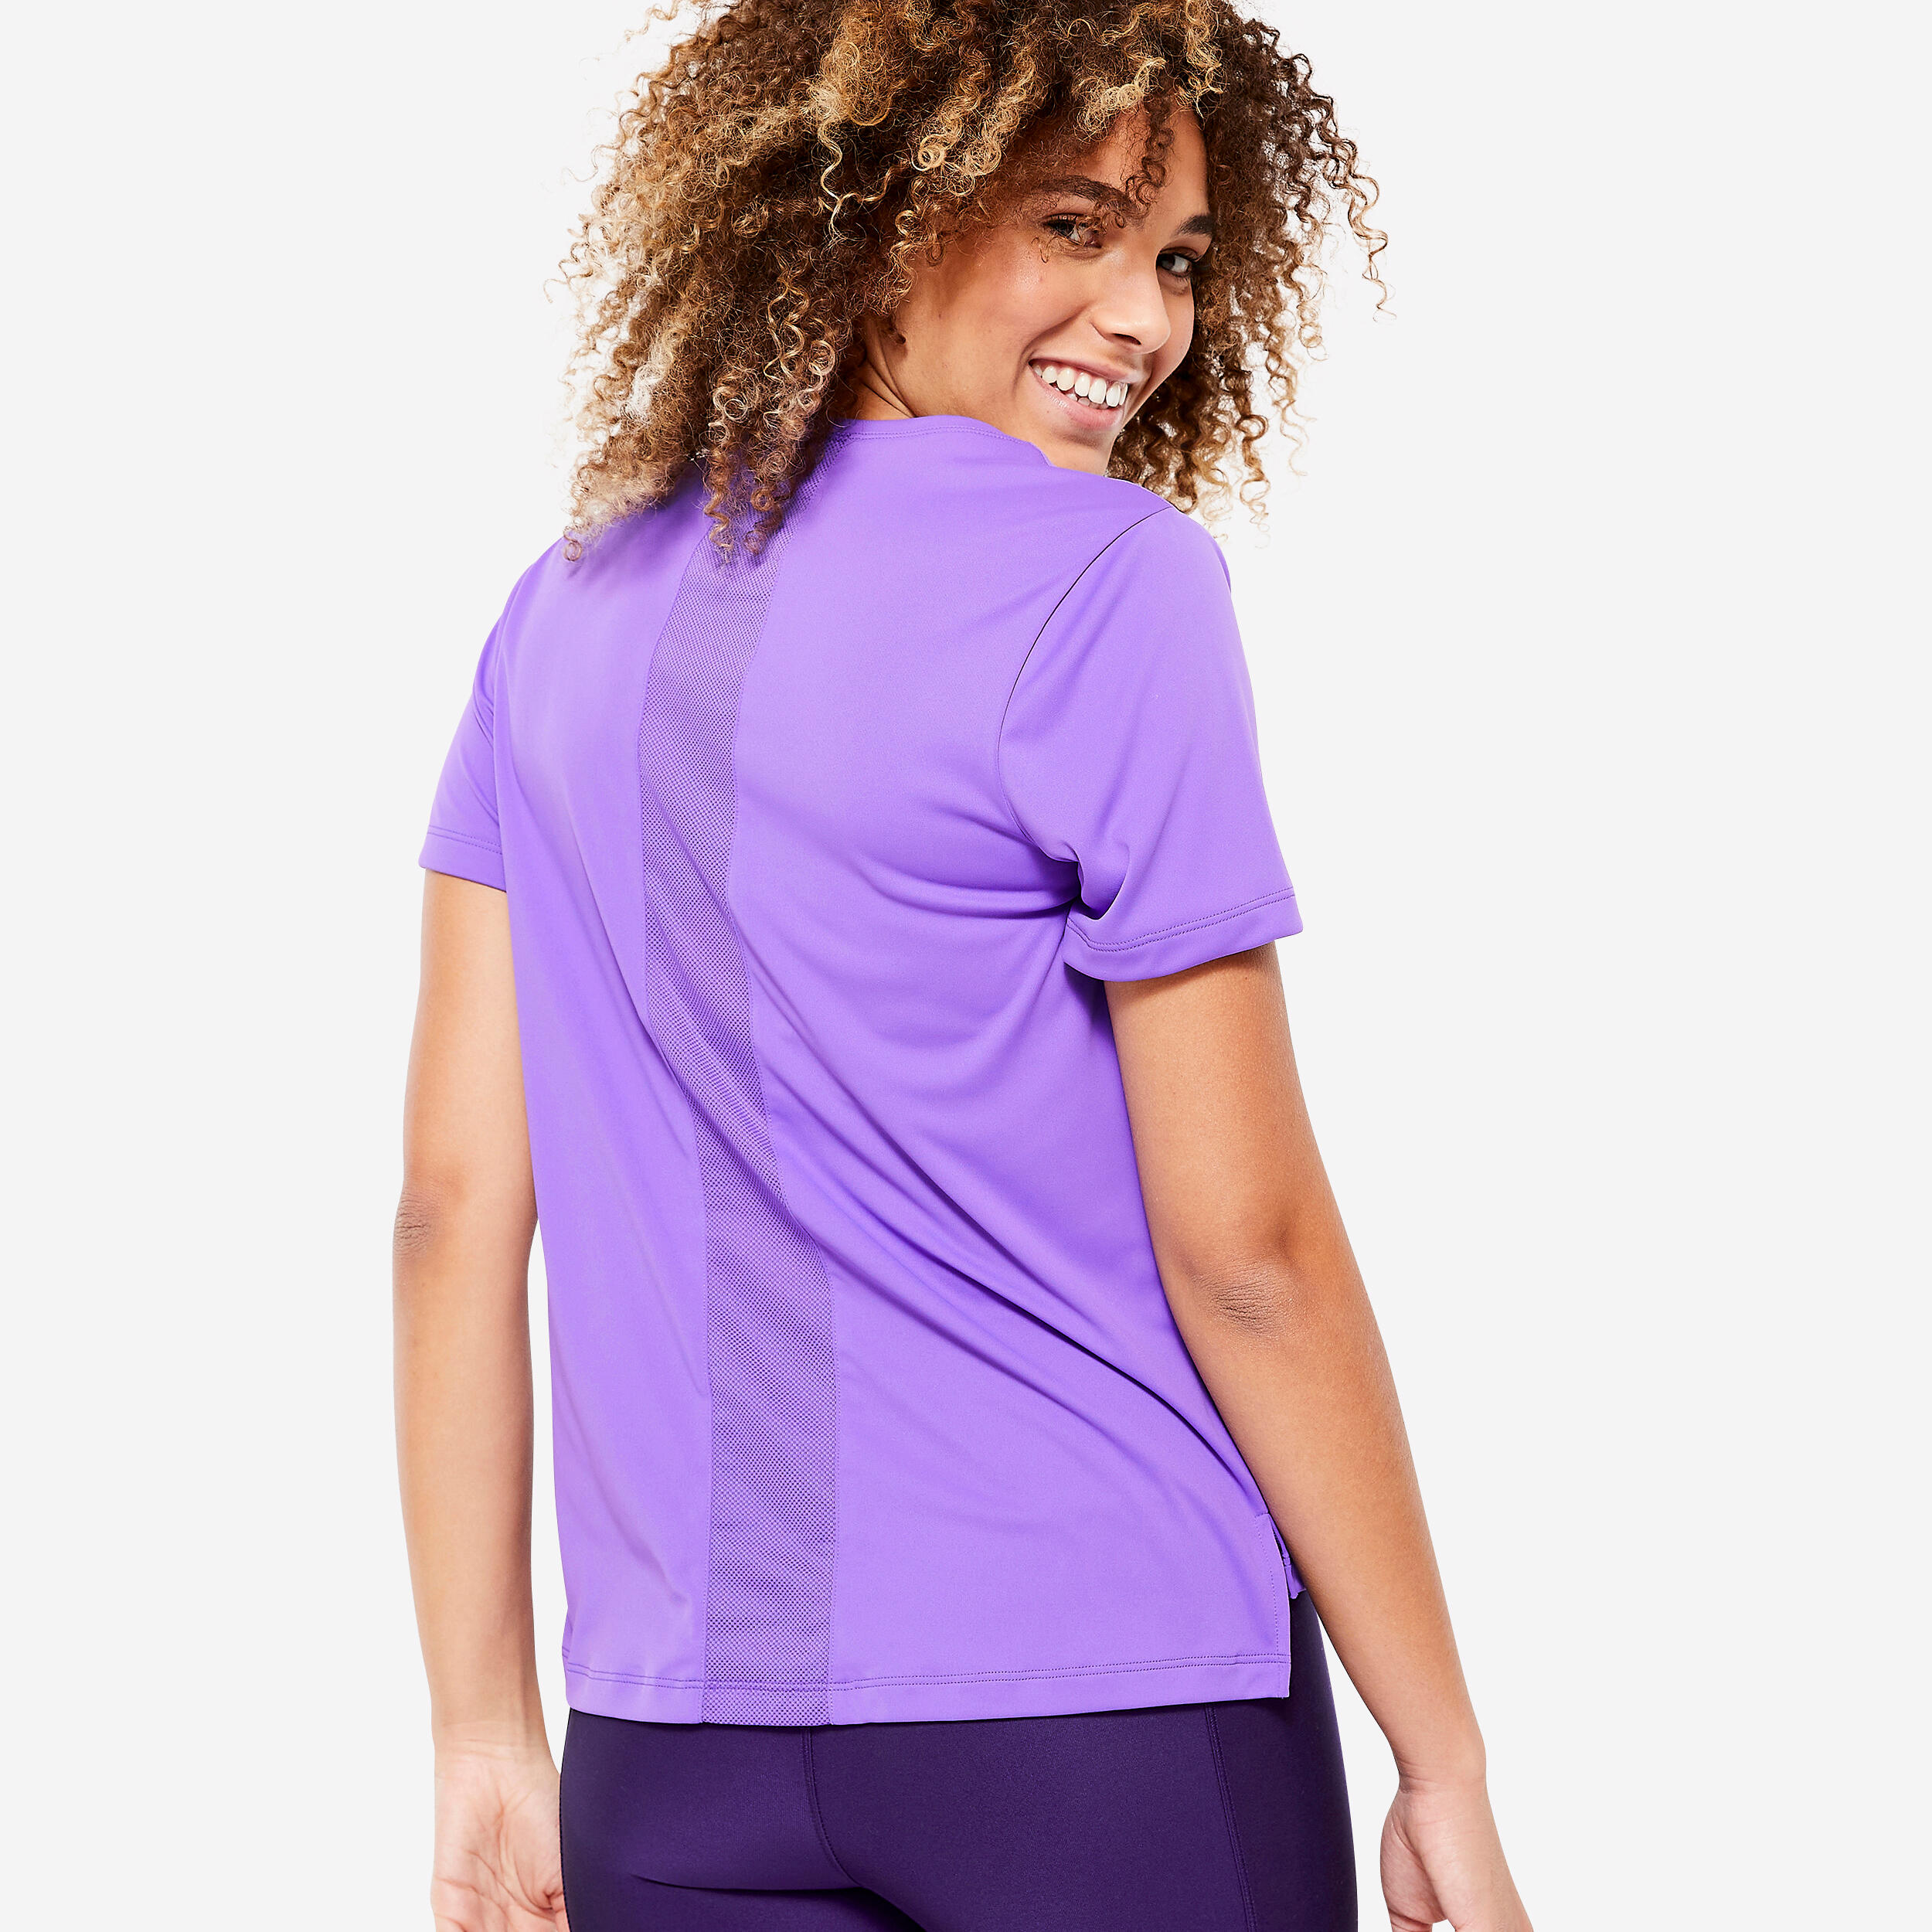 Women's Short-Sleeved Cardio Fitness T-Shirt - Purple 4/6